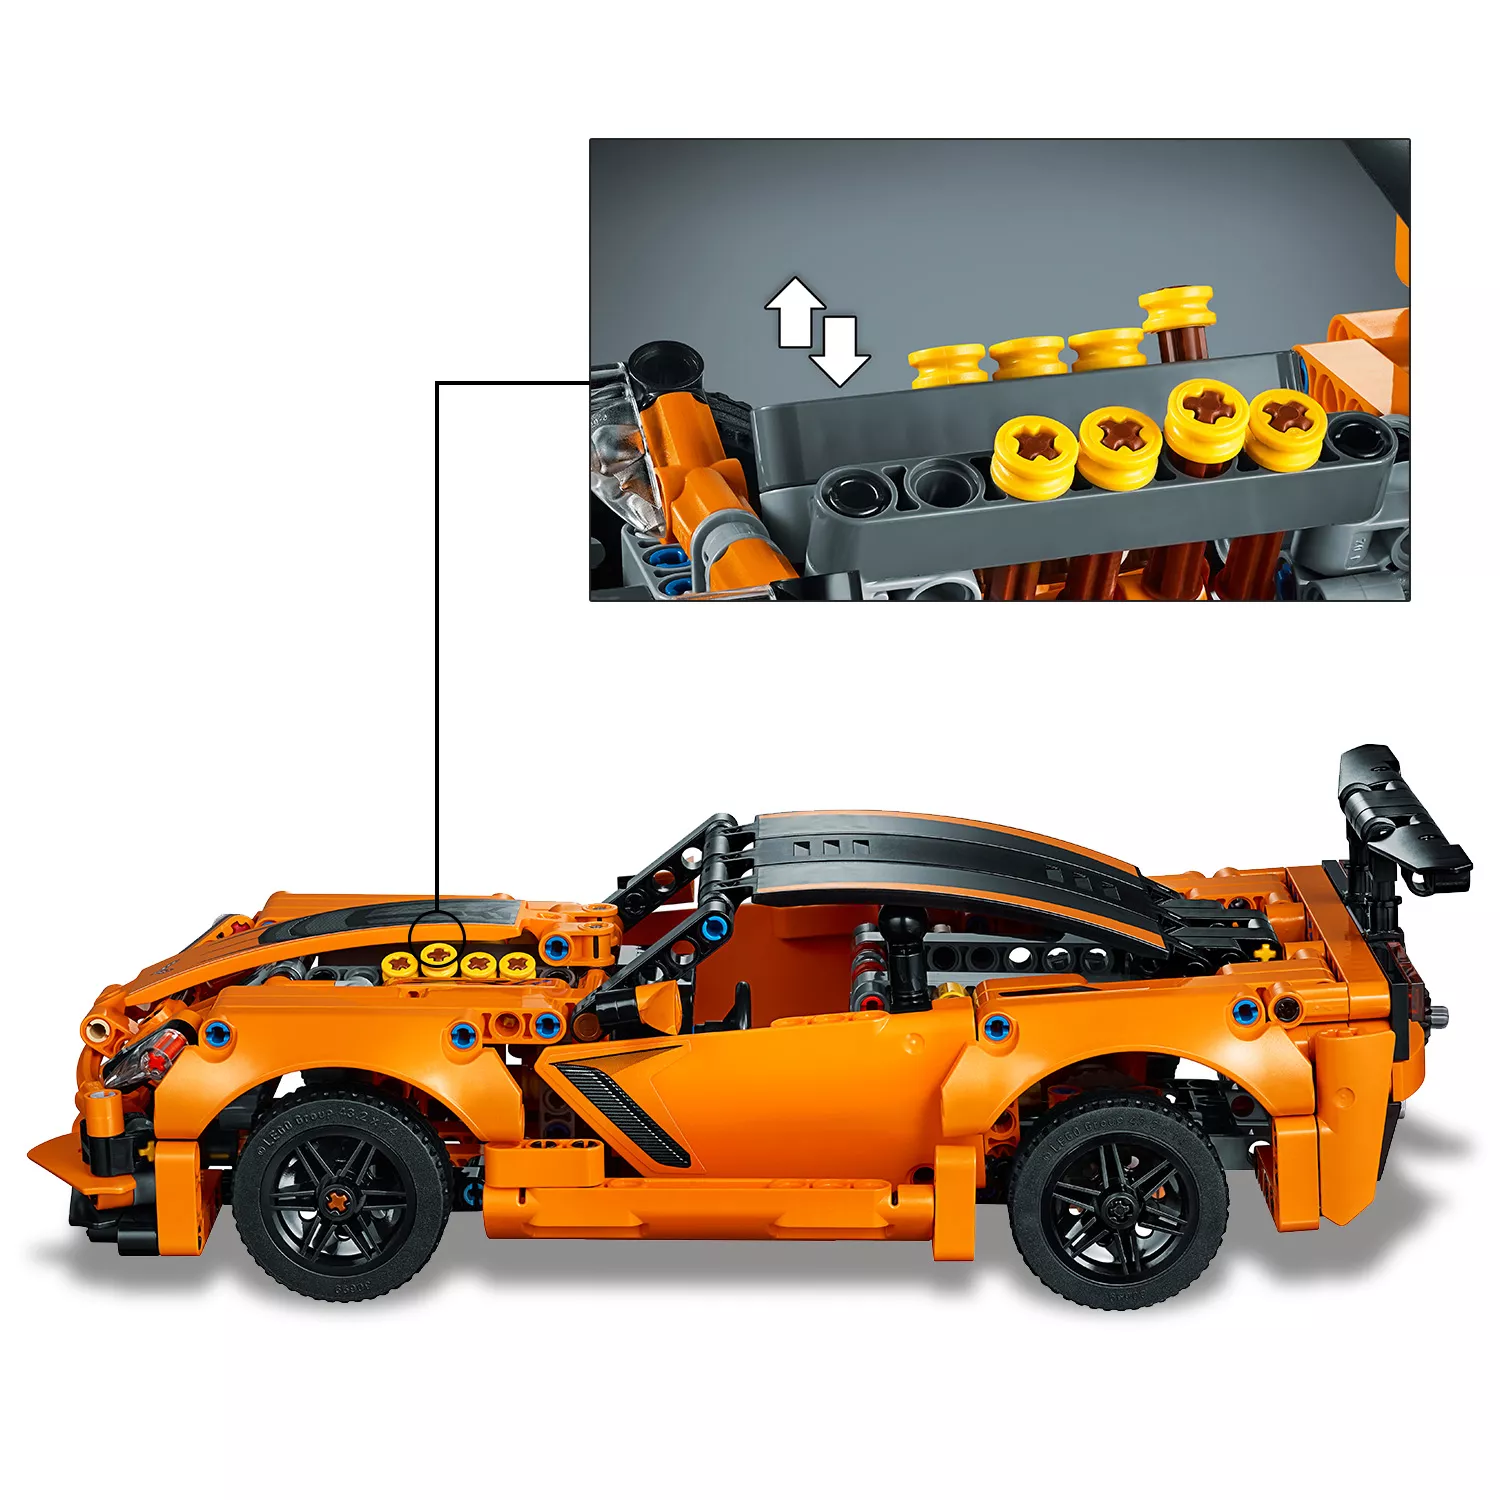 LEGO Technic Chevrolet Corvette ZR1